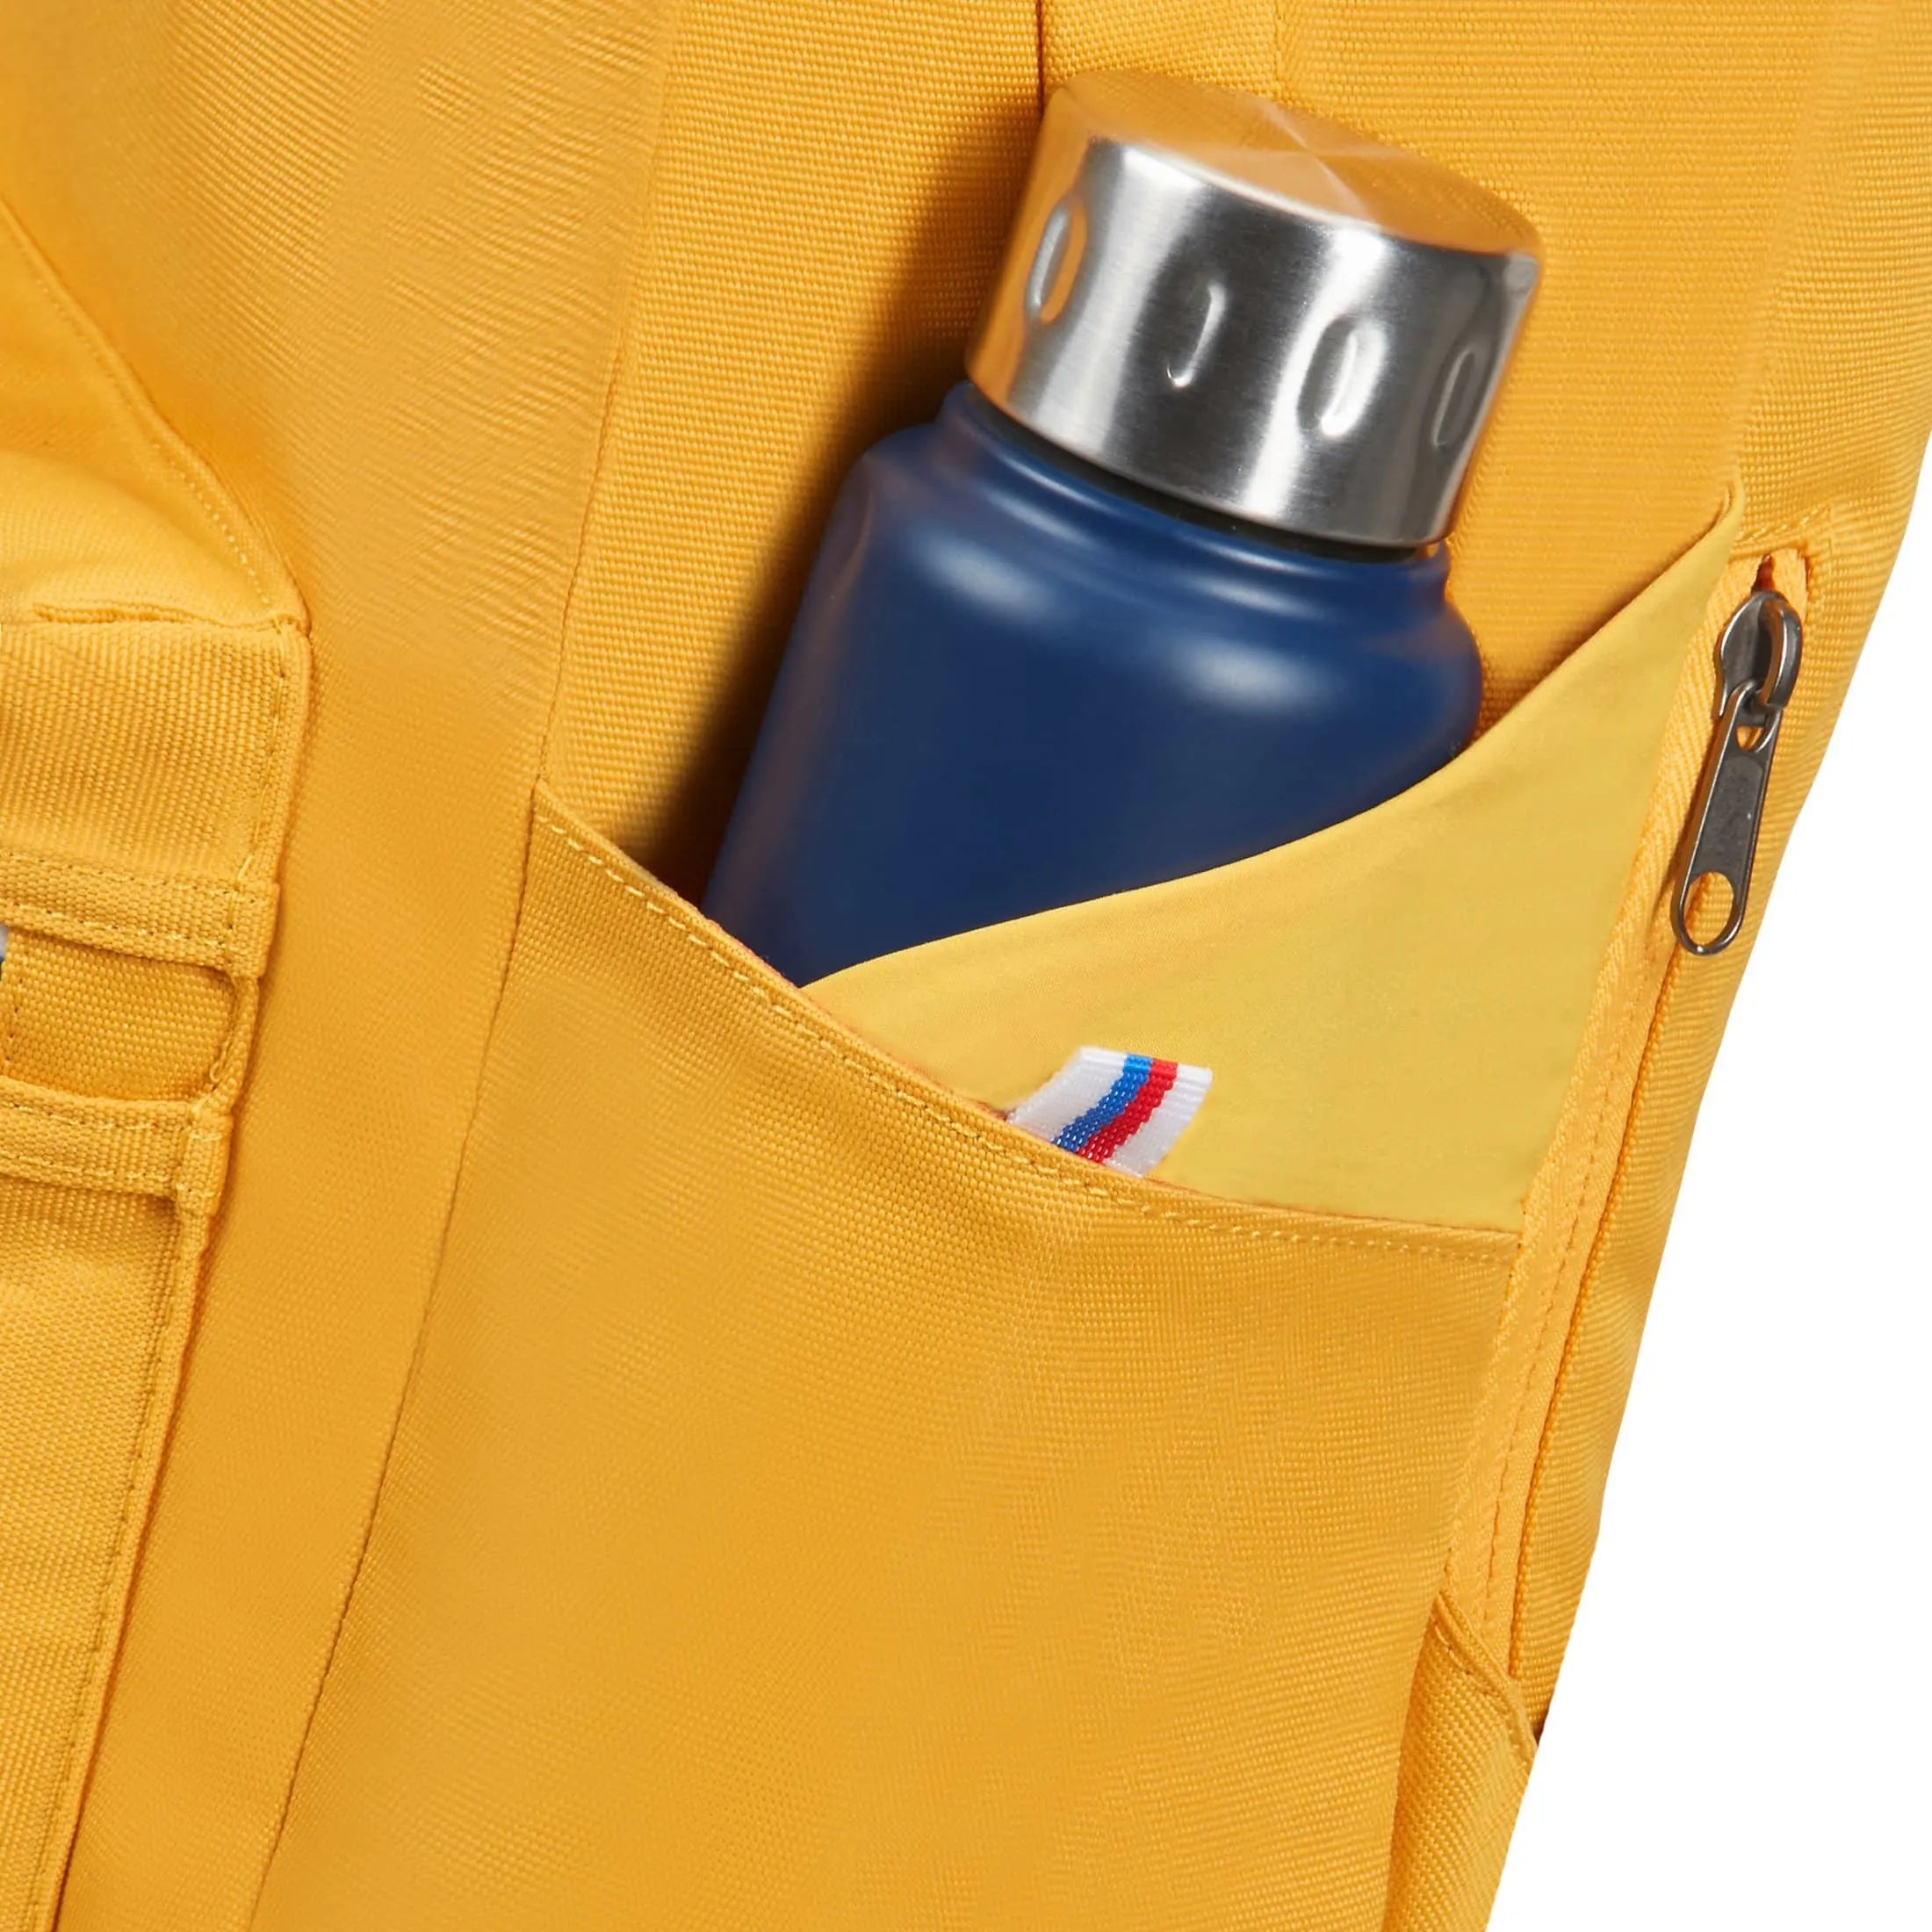 American Tourister Upbeat leisure backpack 42 cm - atlantic blue